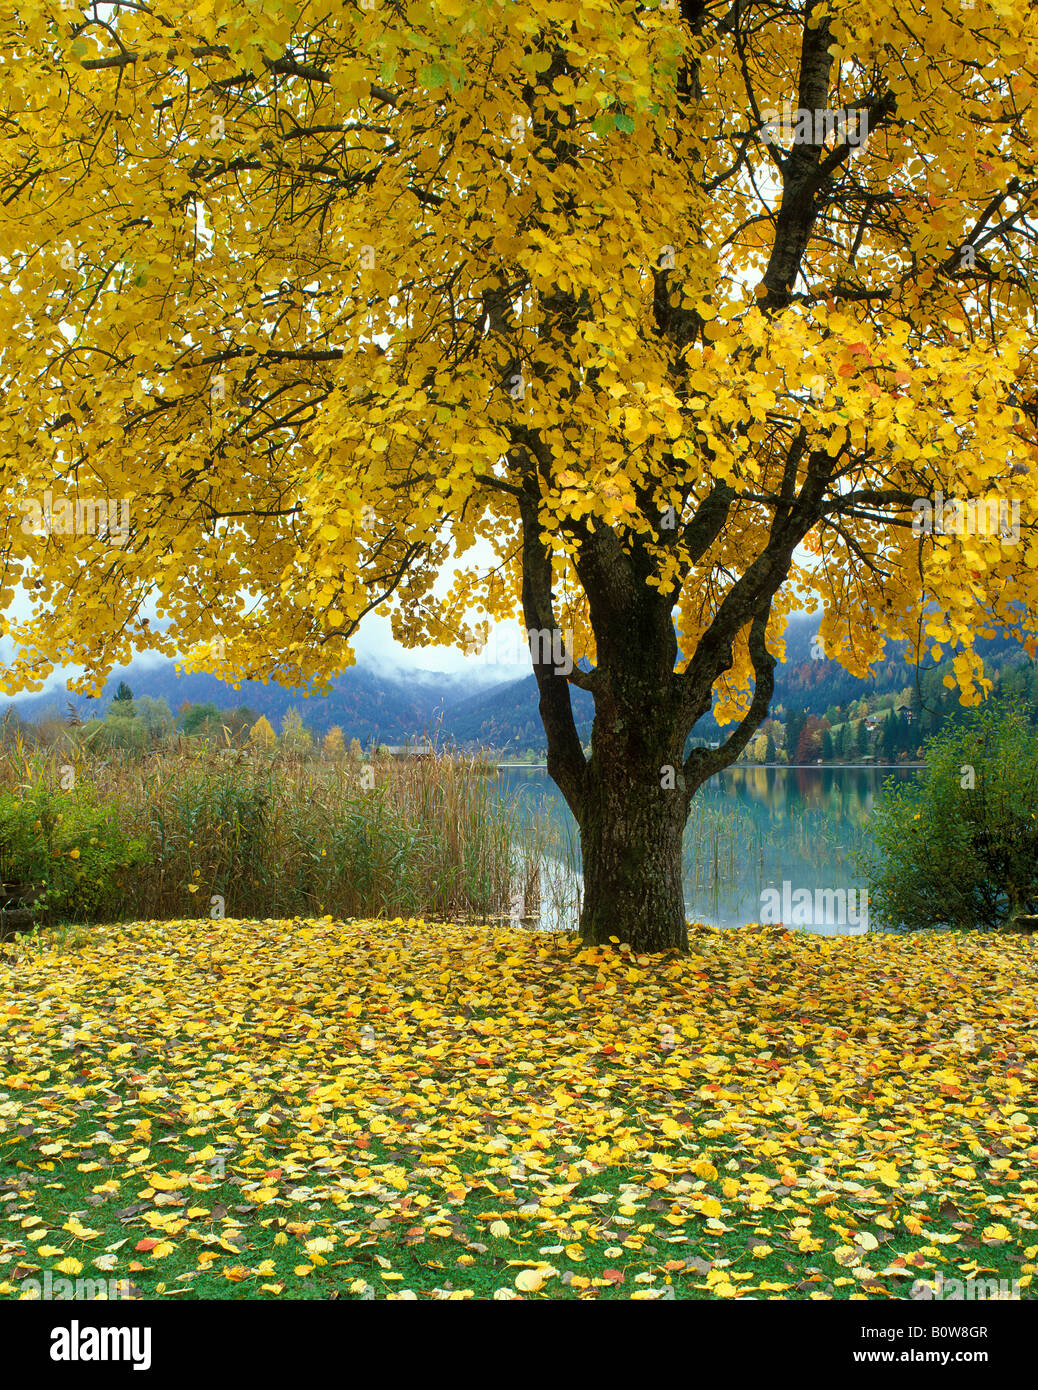 Deciduous tree in autumn, autumn foliage, colourful leaves Stock Photo